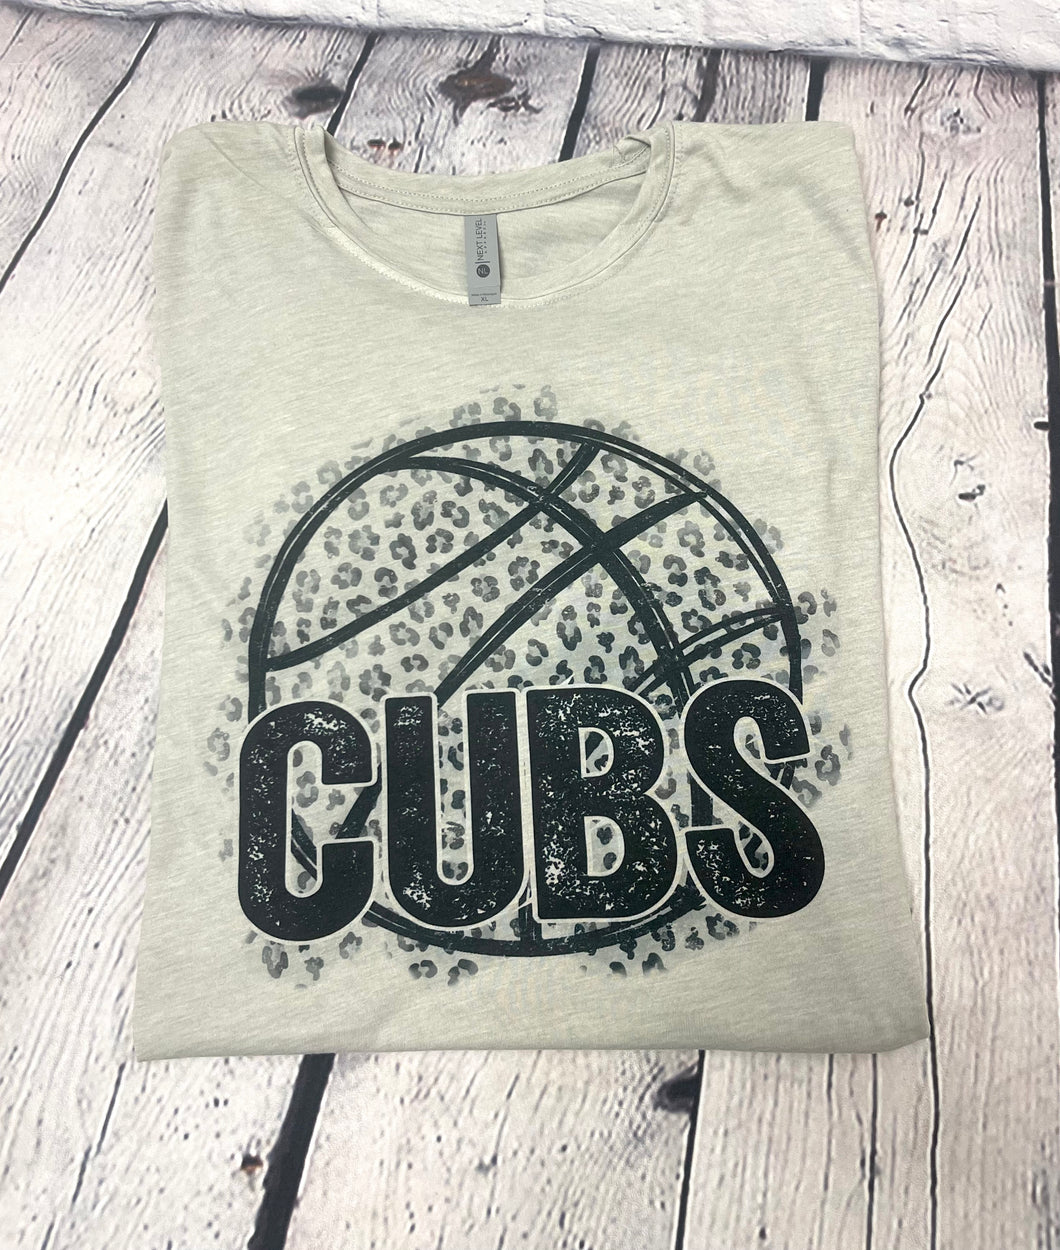 Cubs basketball shirt